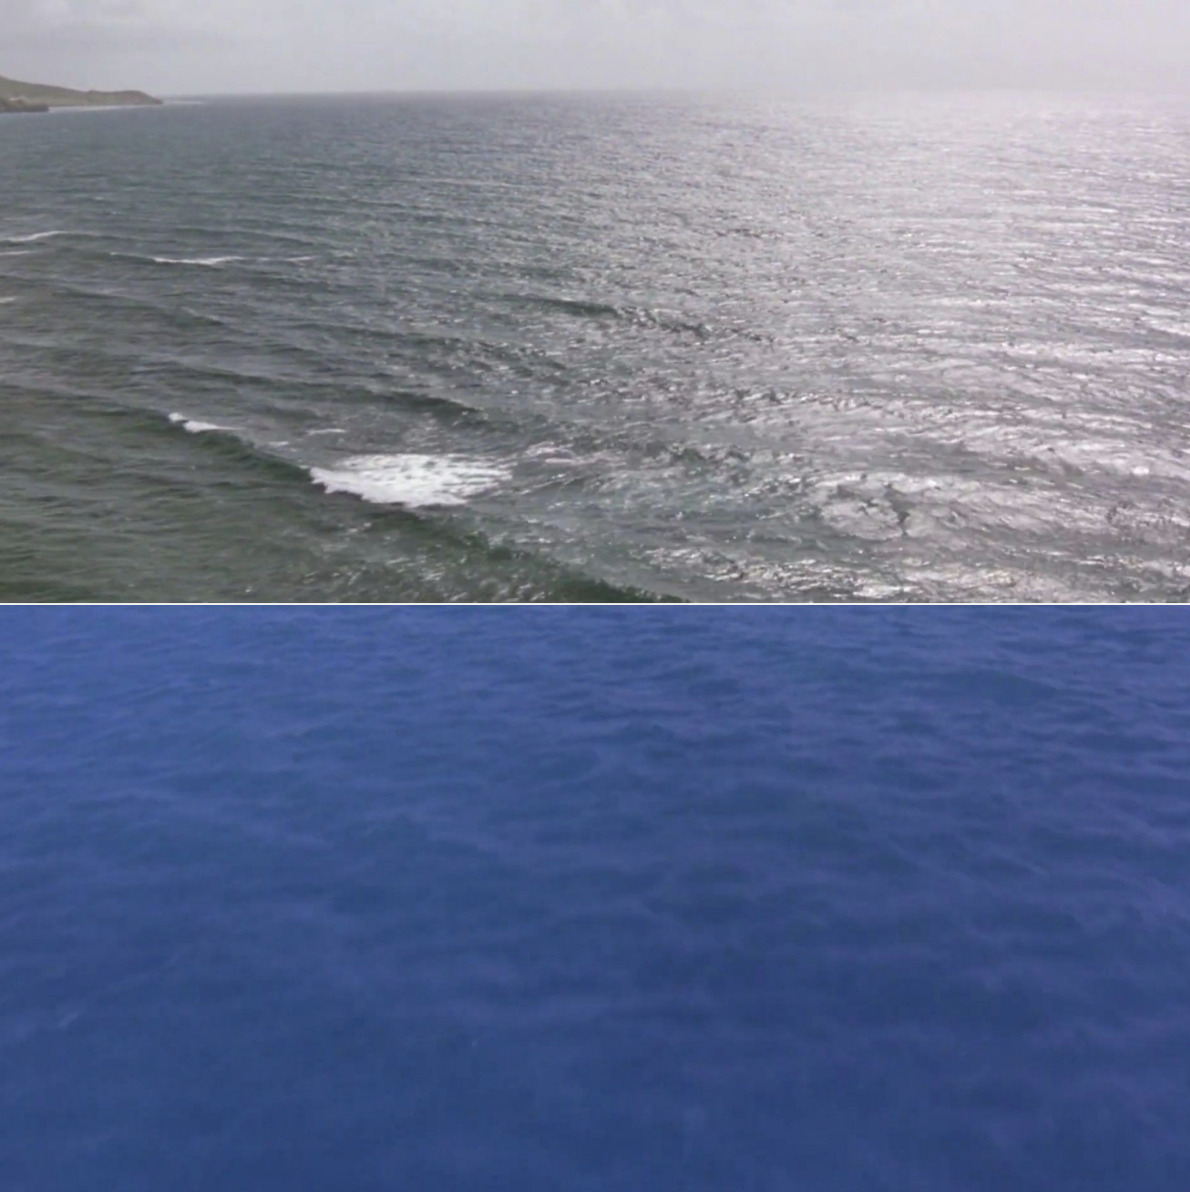 Dull grey vs. bright blue ocean